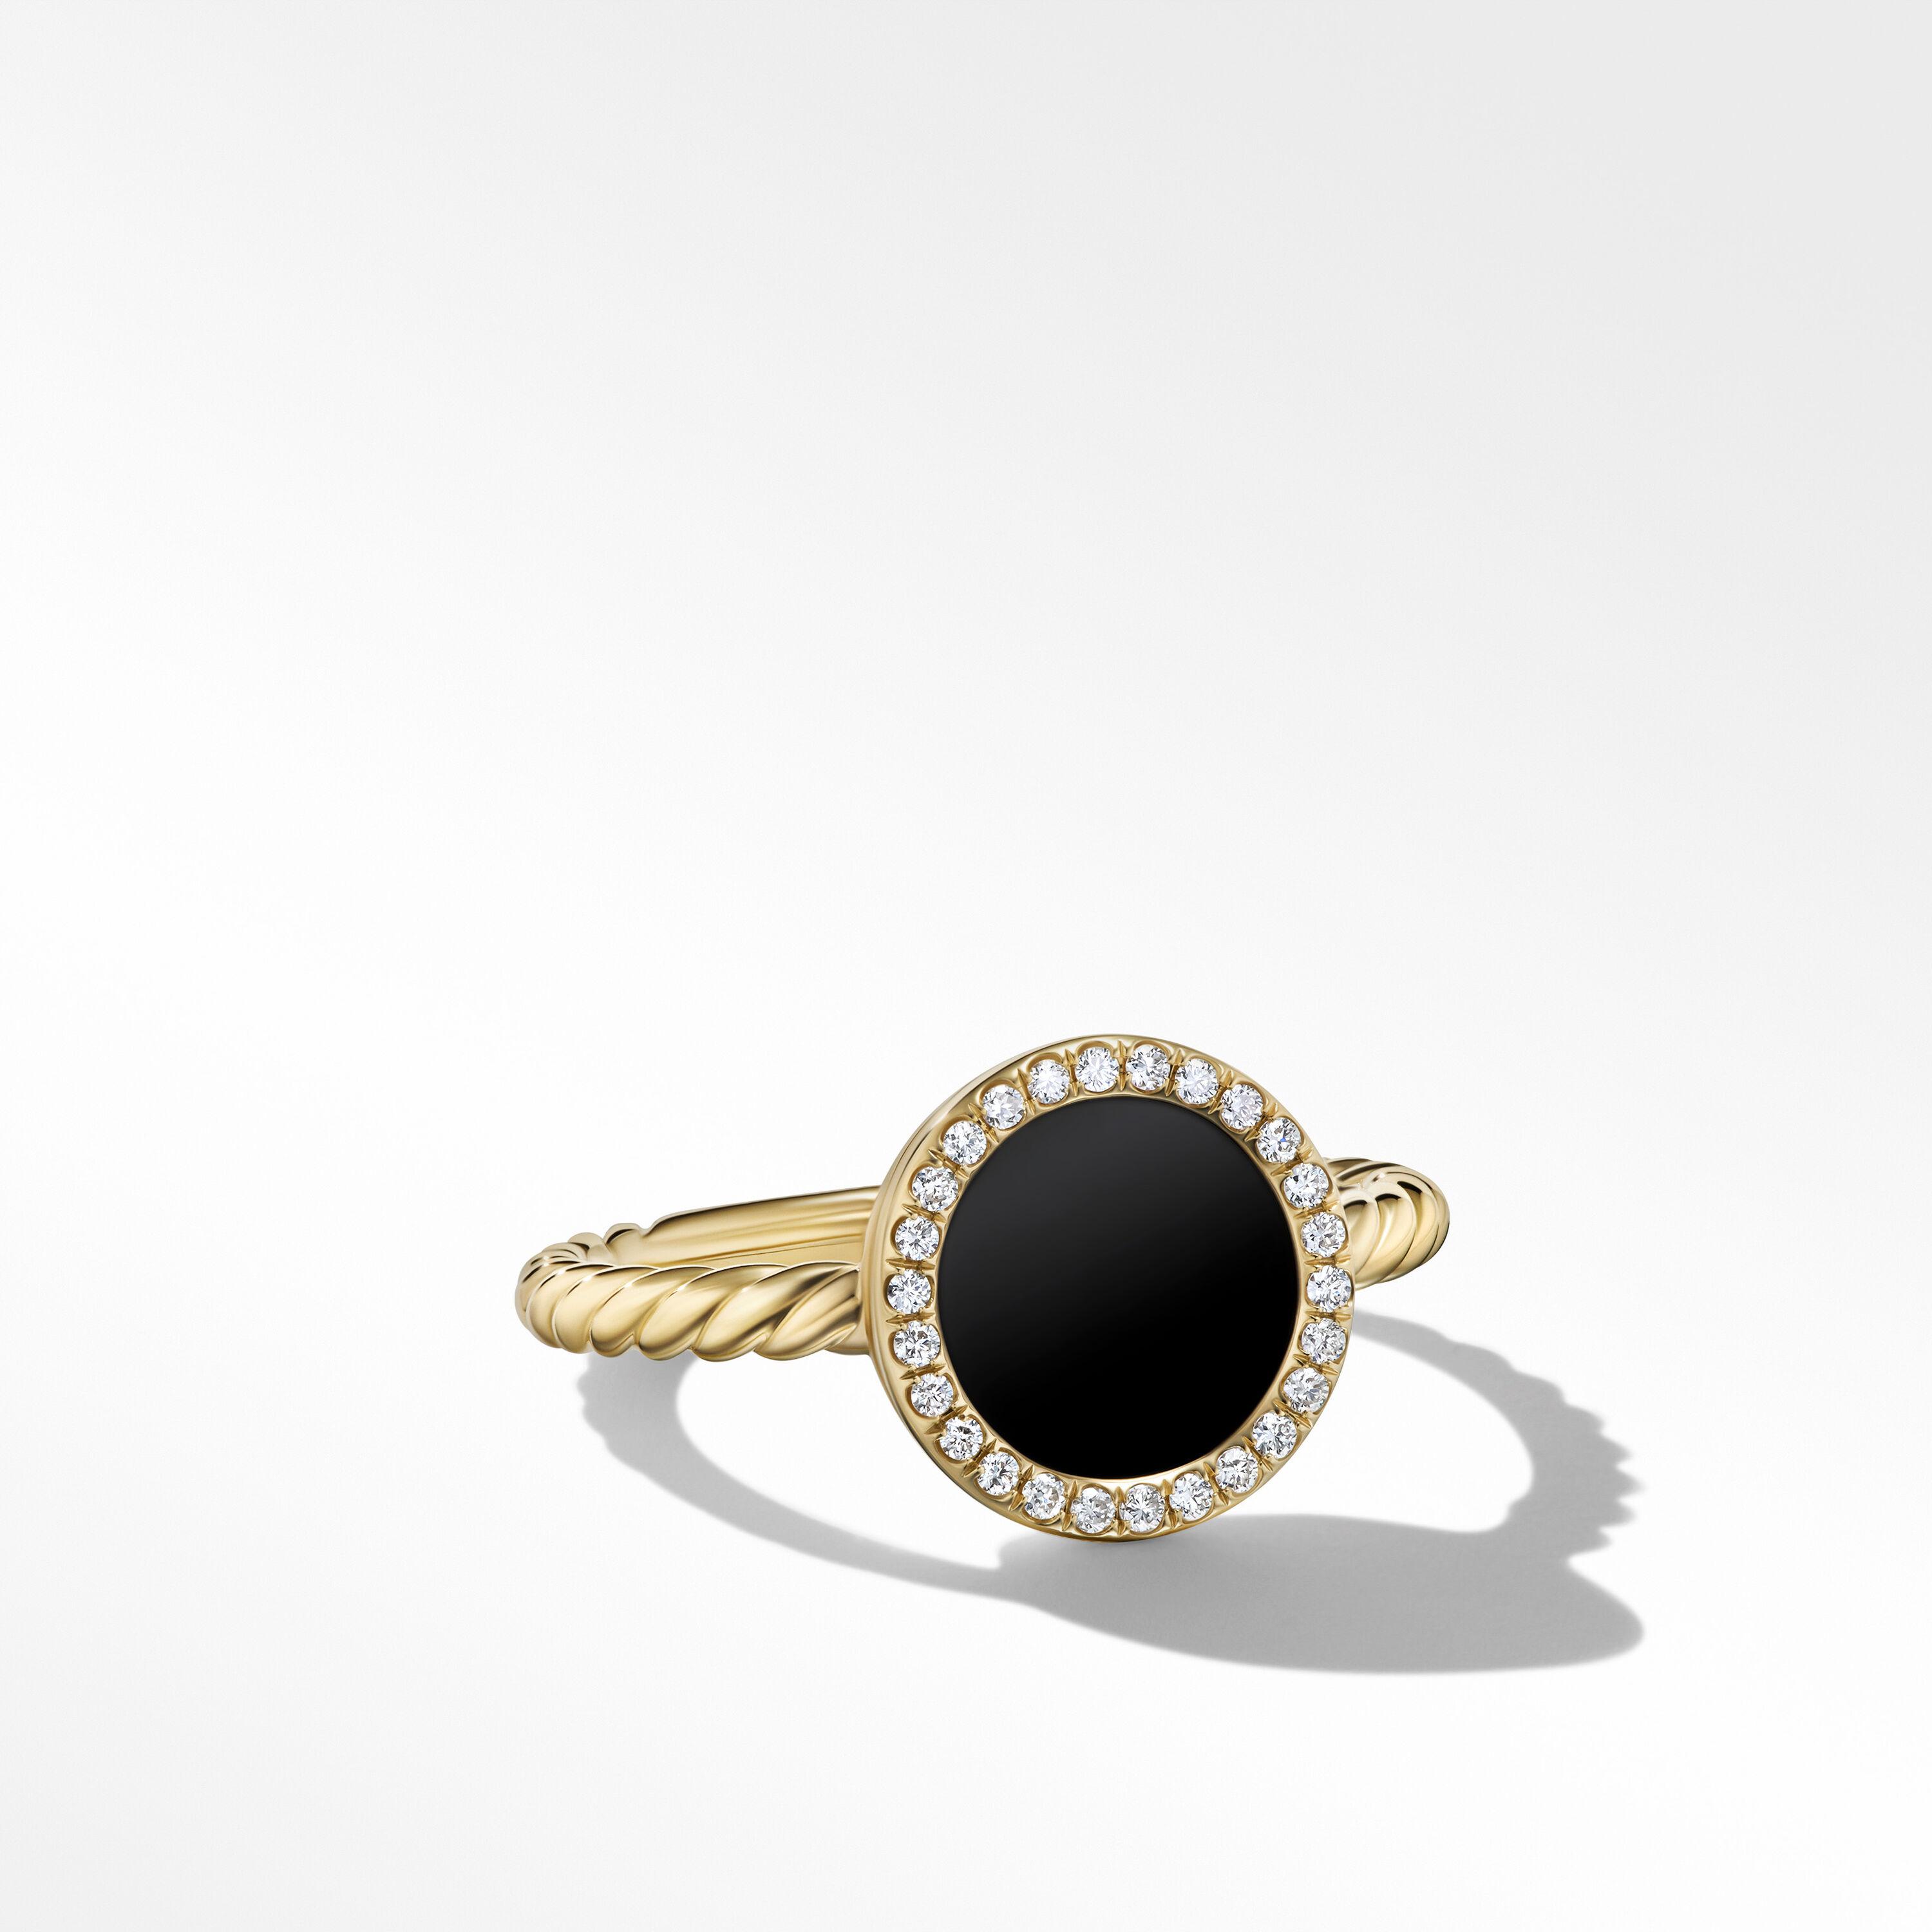 David Yurman Petite DY Elements Ring with Black Onyx and Pave Diamonds, size 6.5